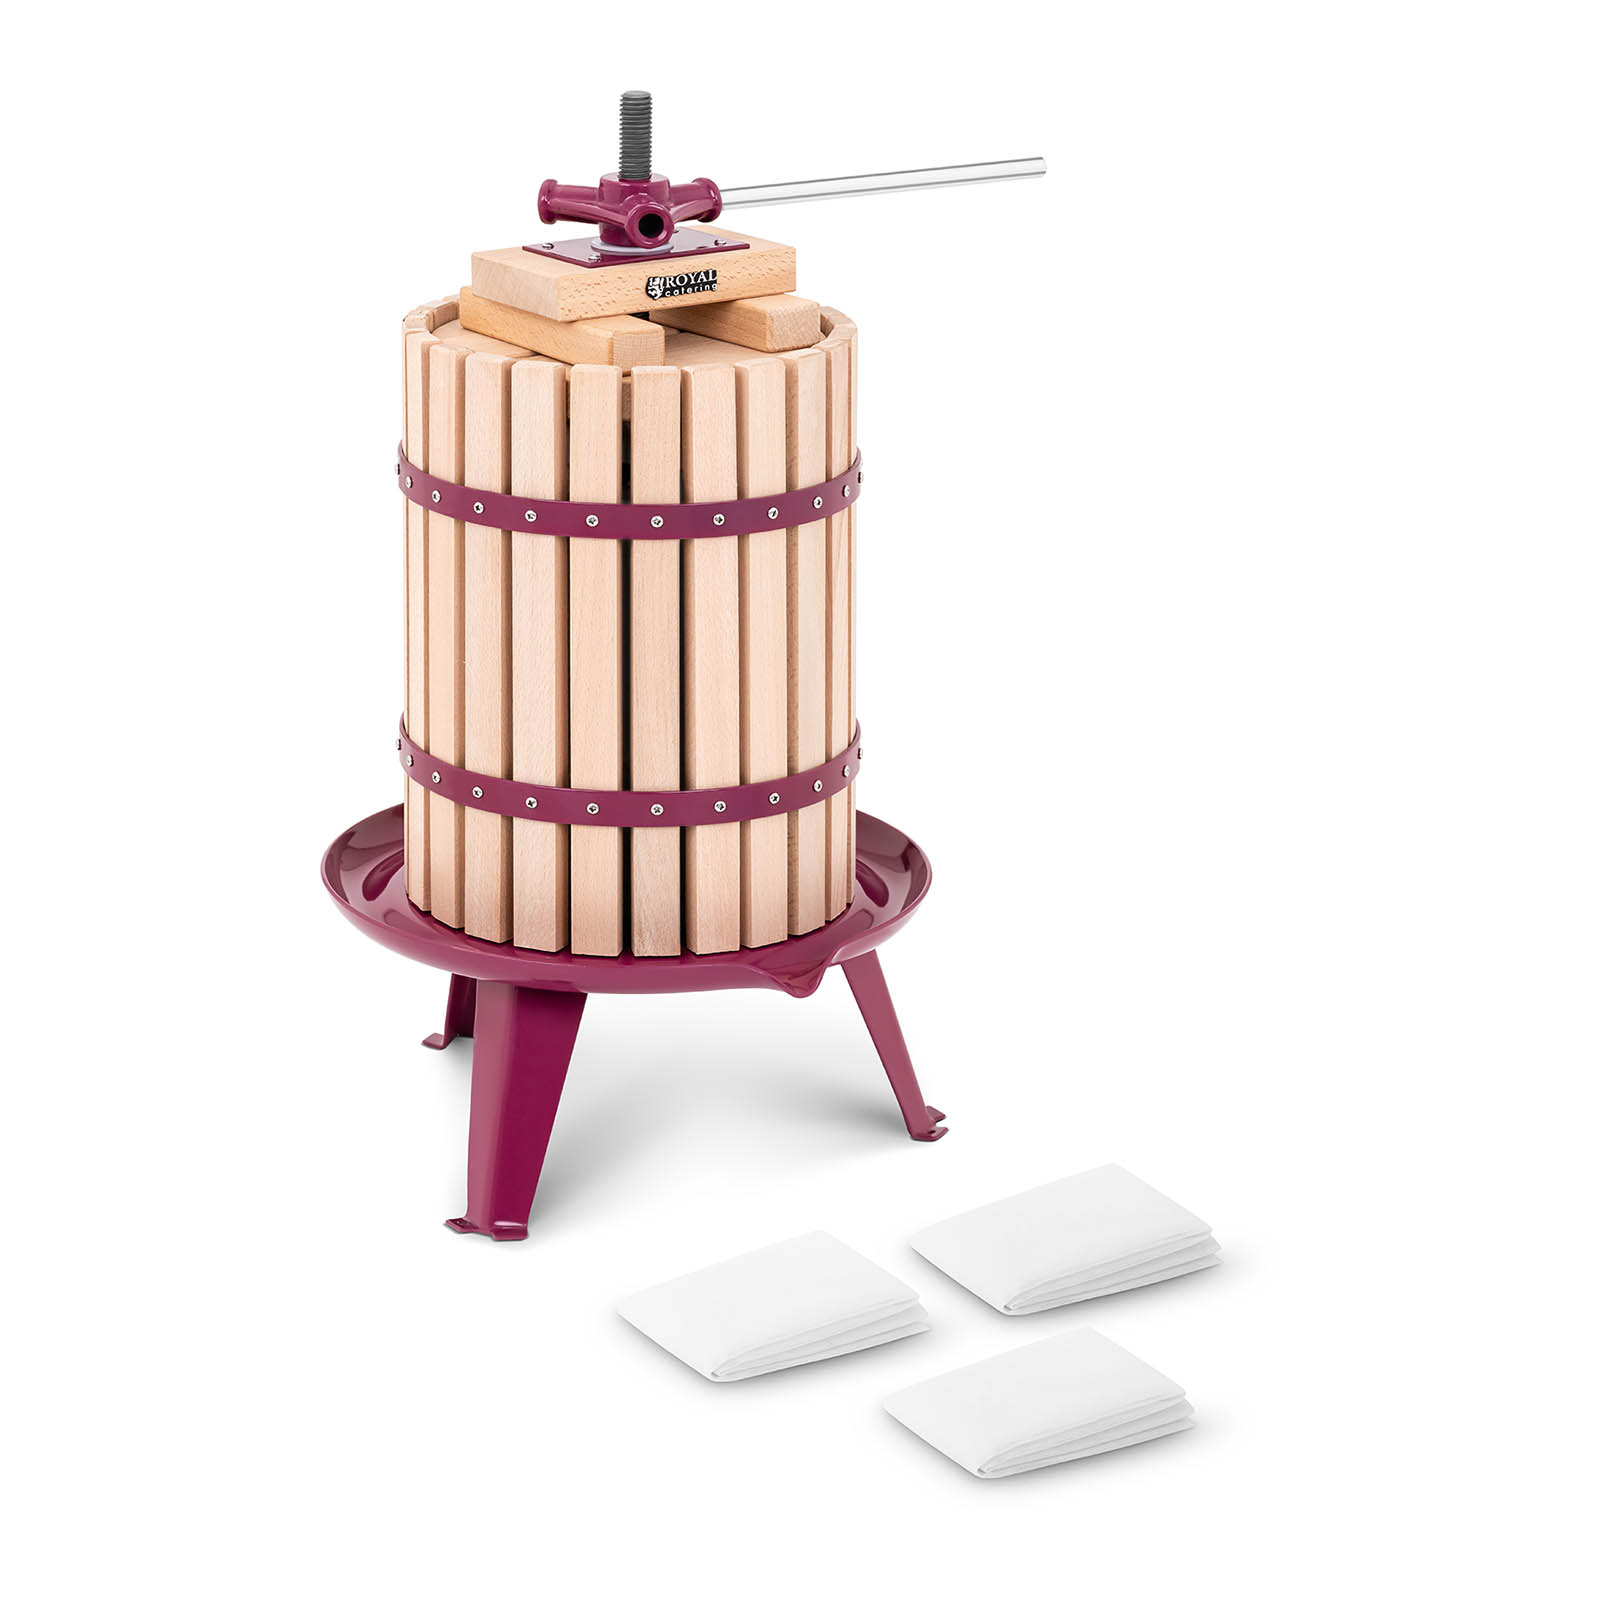 Fruit Press - manual - wooden - 18 L - incl. wooden blocks, pressure plate and 3 pressing cloths